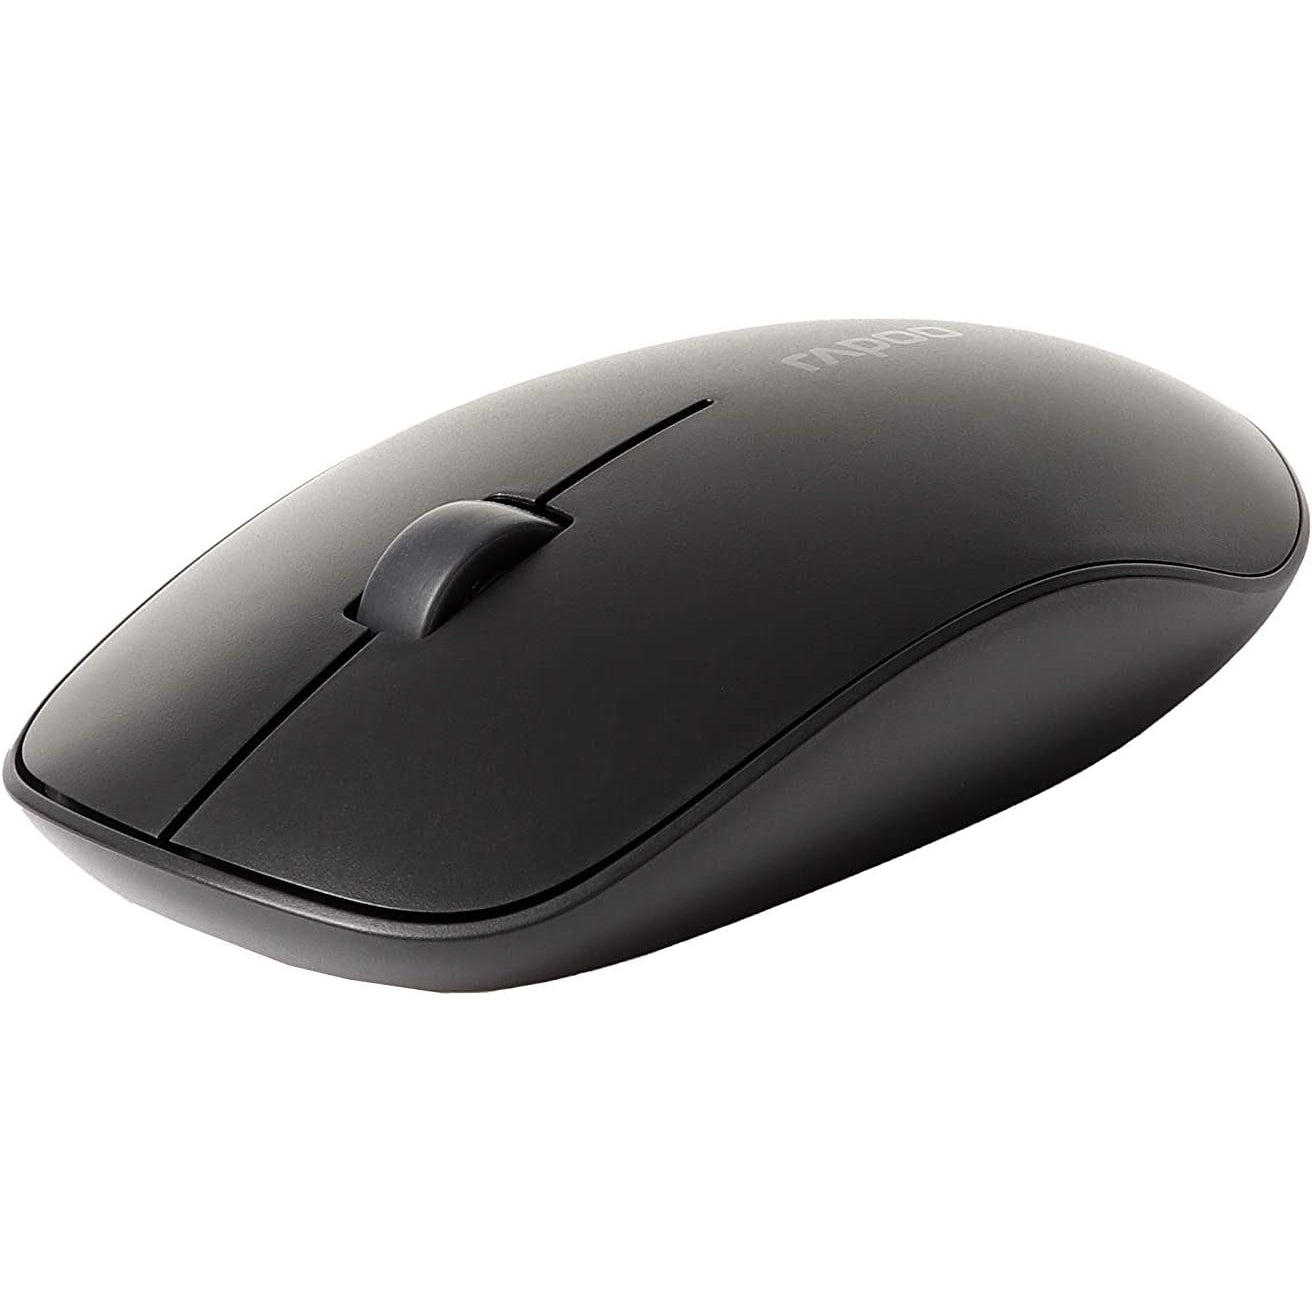 Rapoo M200 Silent Wireless Mouse - Black - Refurbished Good